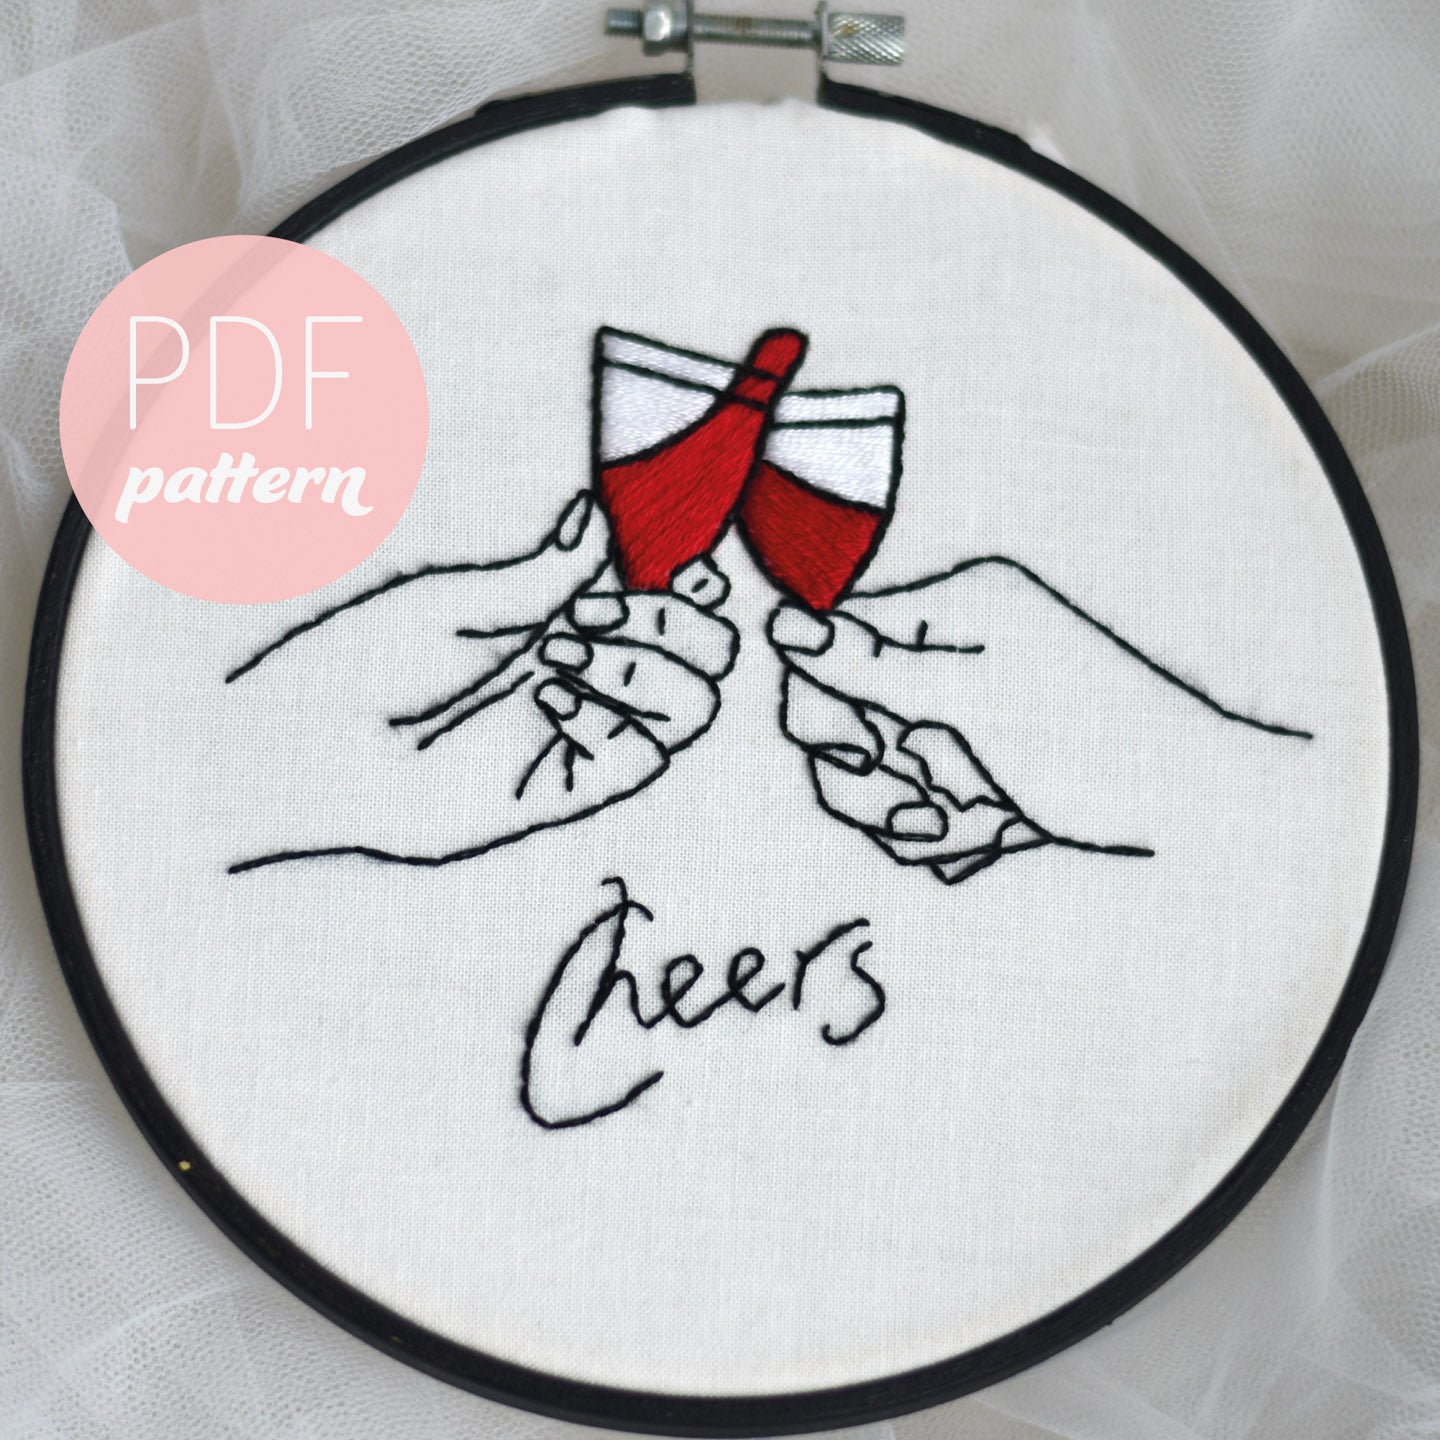 Cheers Digital Embroidery Pattern